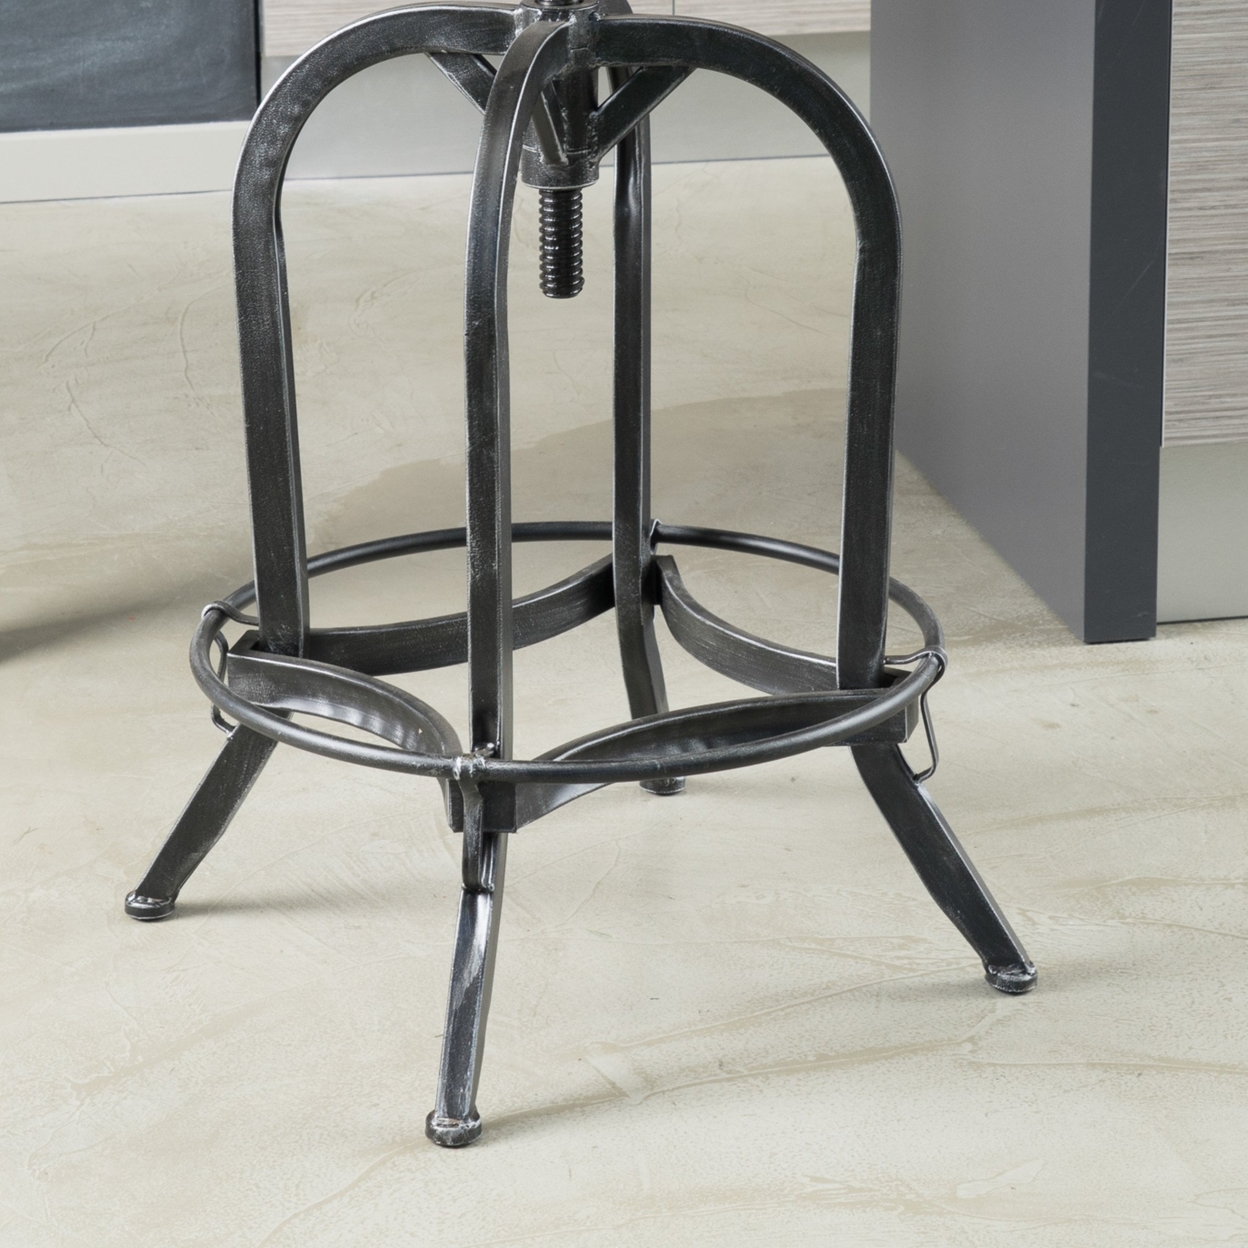 Dempsey Industrial Design Adjustable Height Swivel Seat Stool